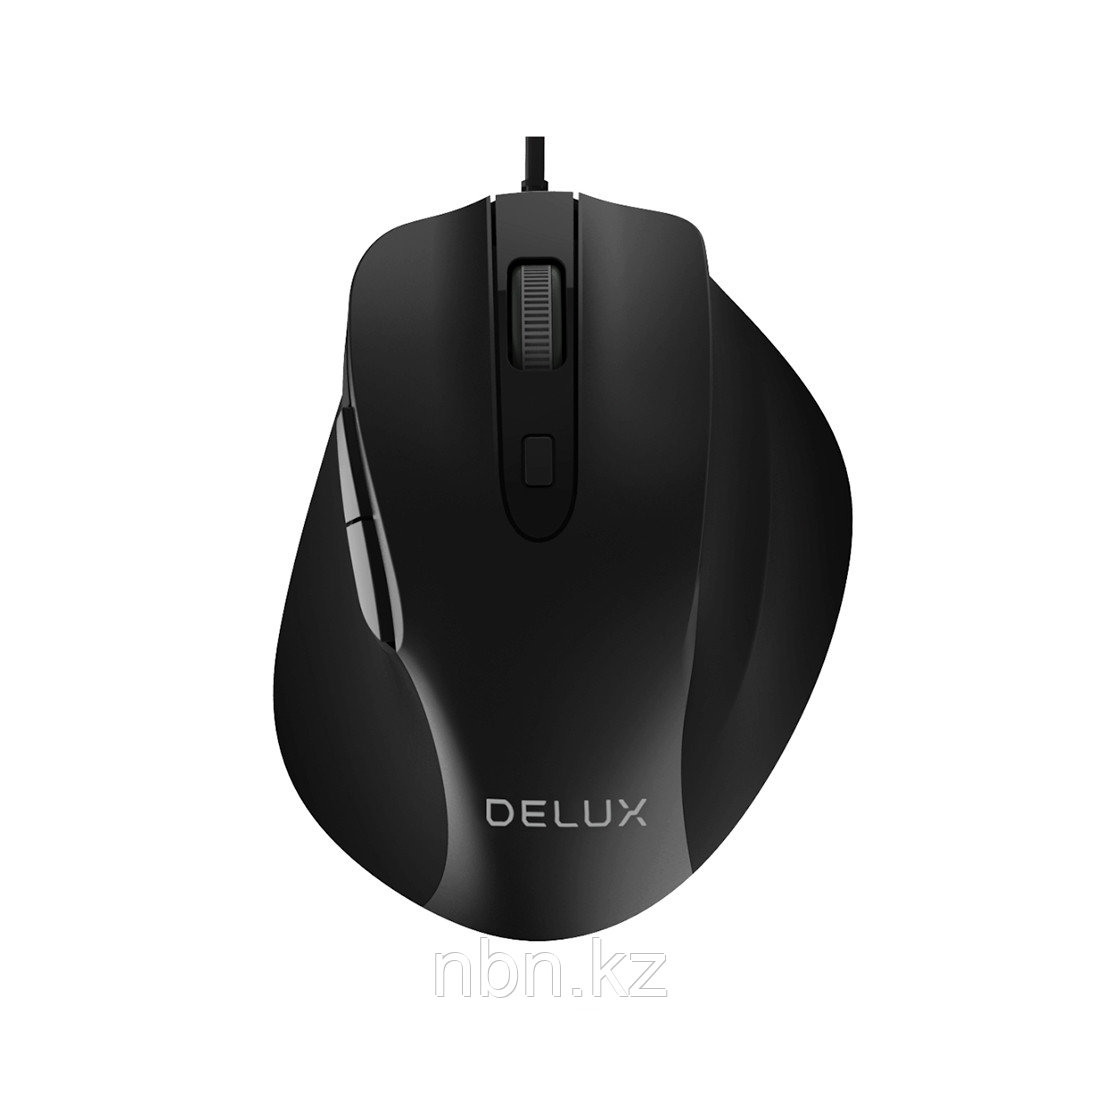 Компьютерная мышь Delux DLM-517OUB, фото 1